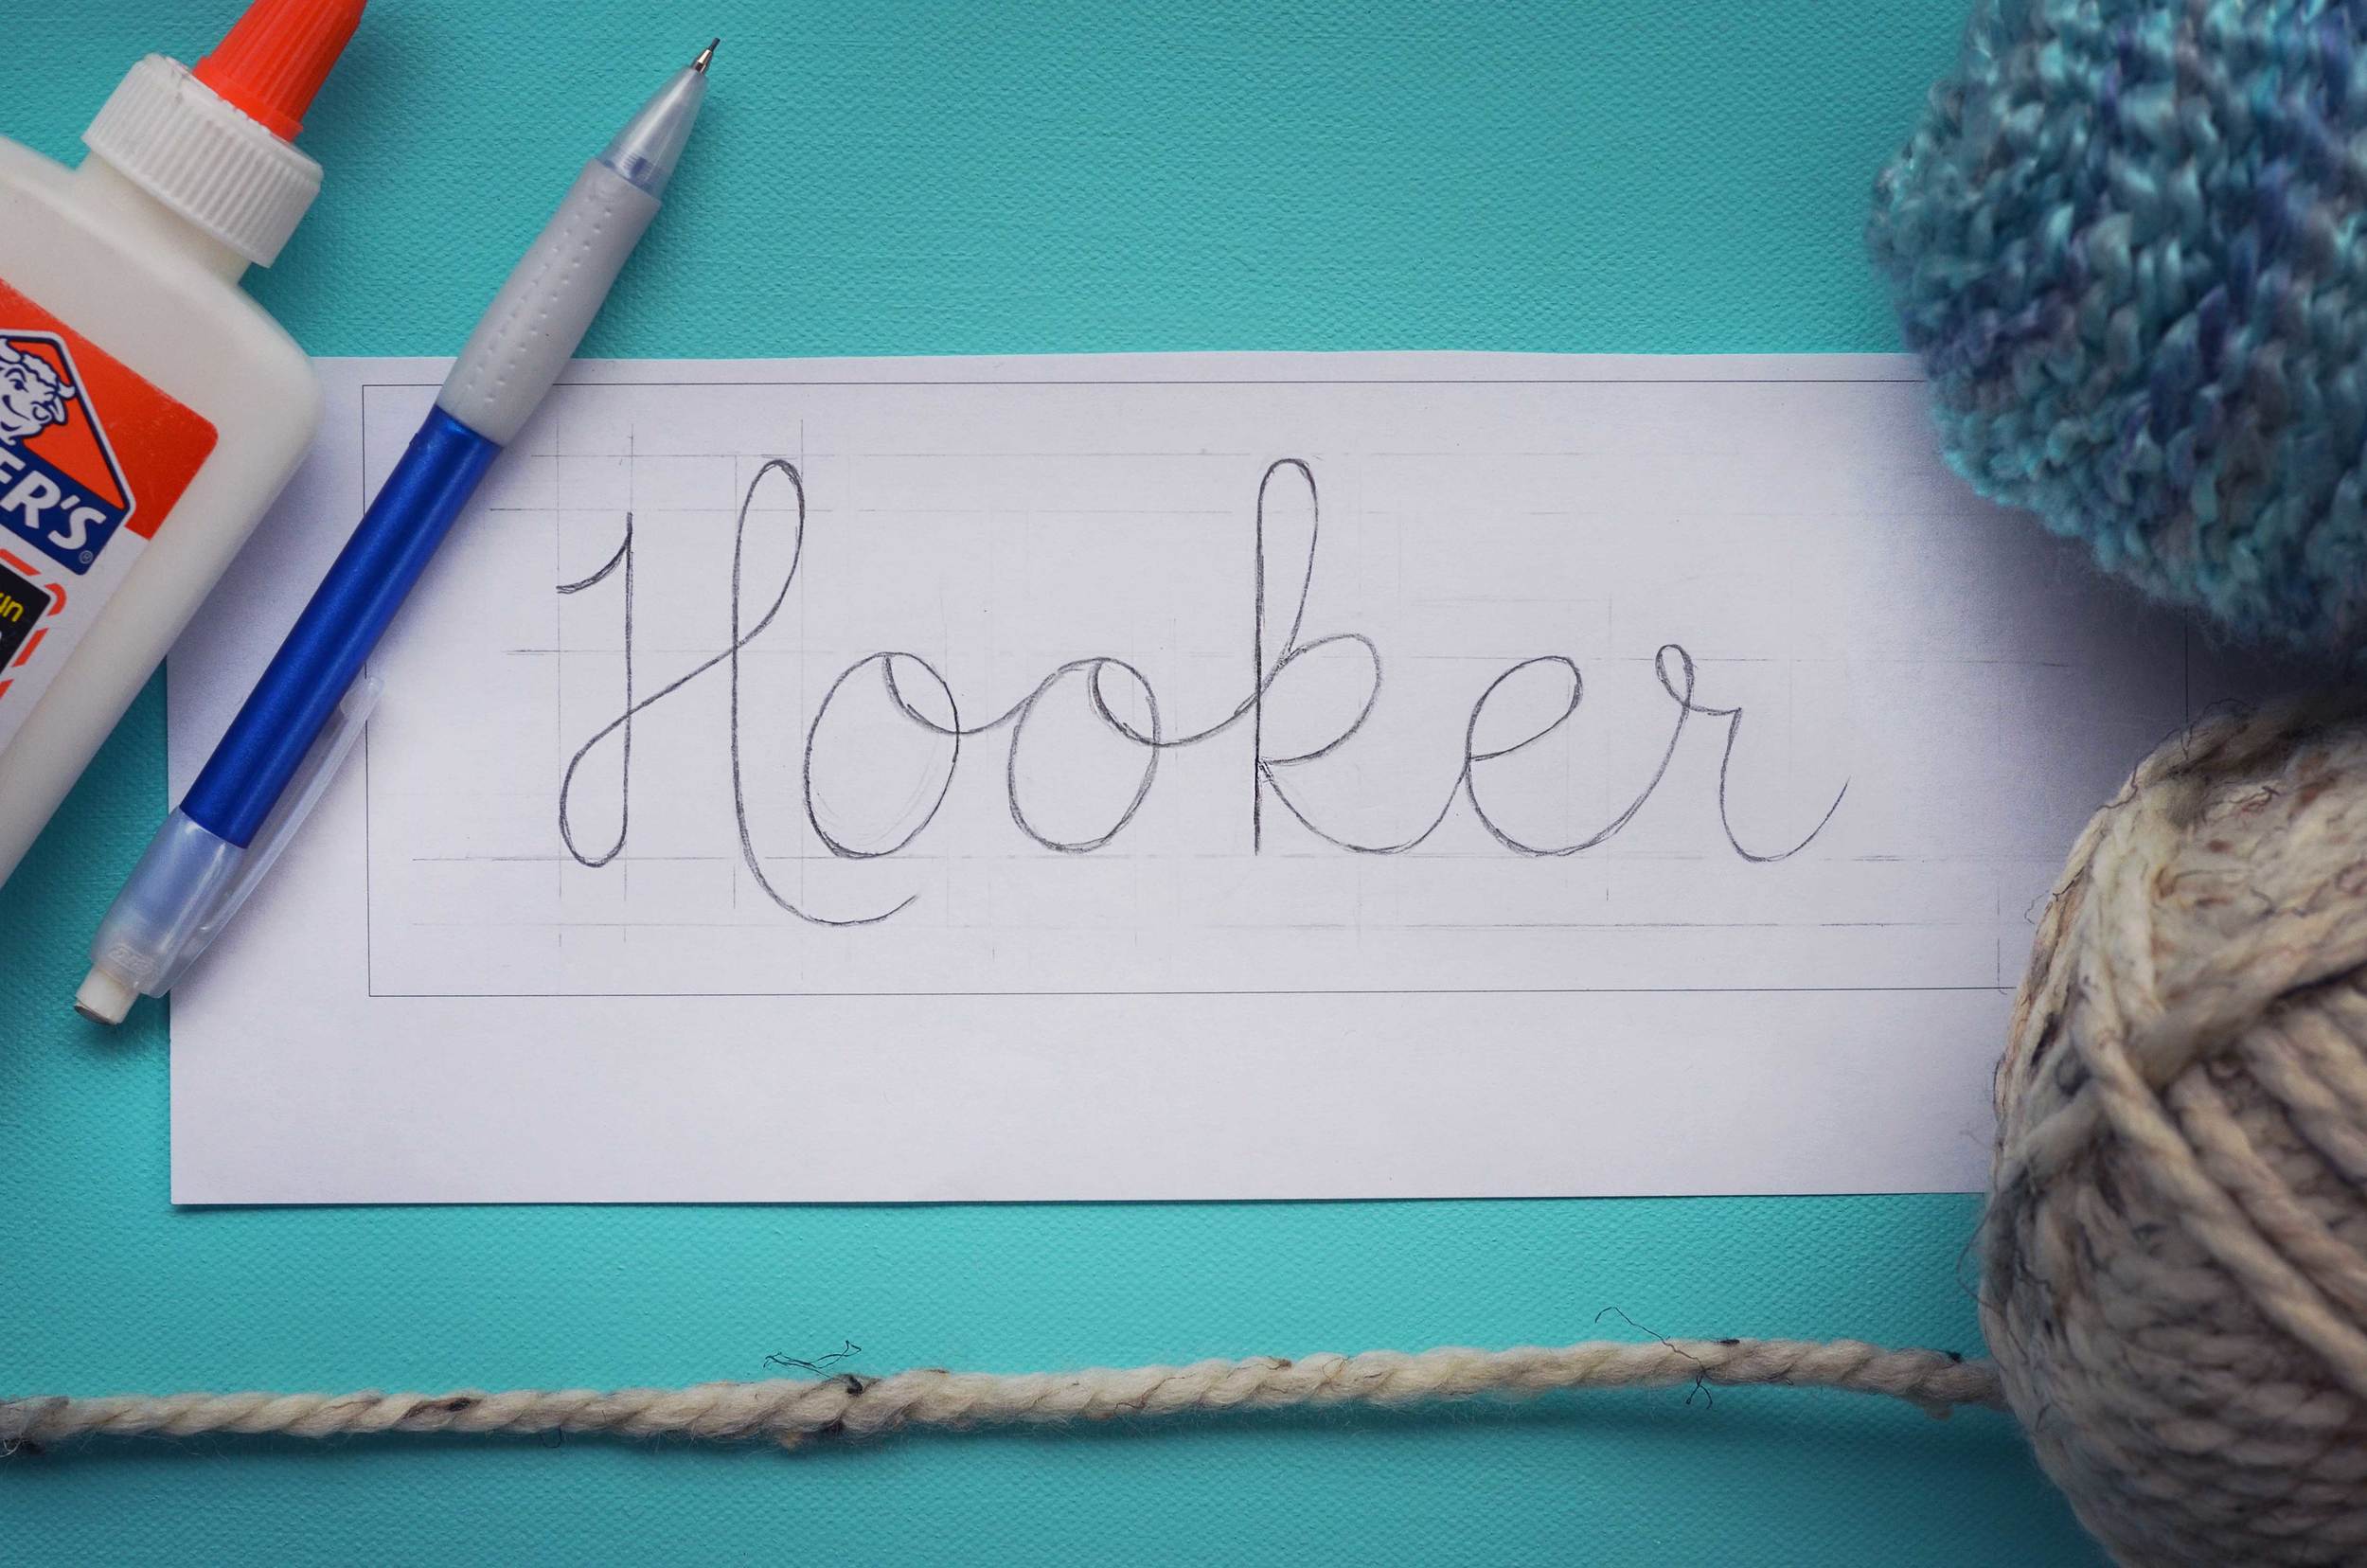 Hooker_1.jpg